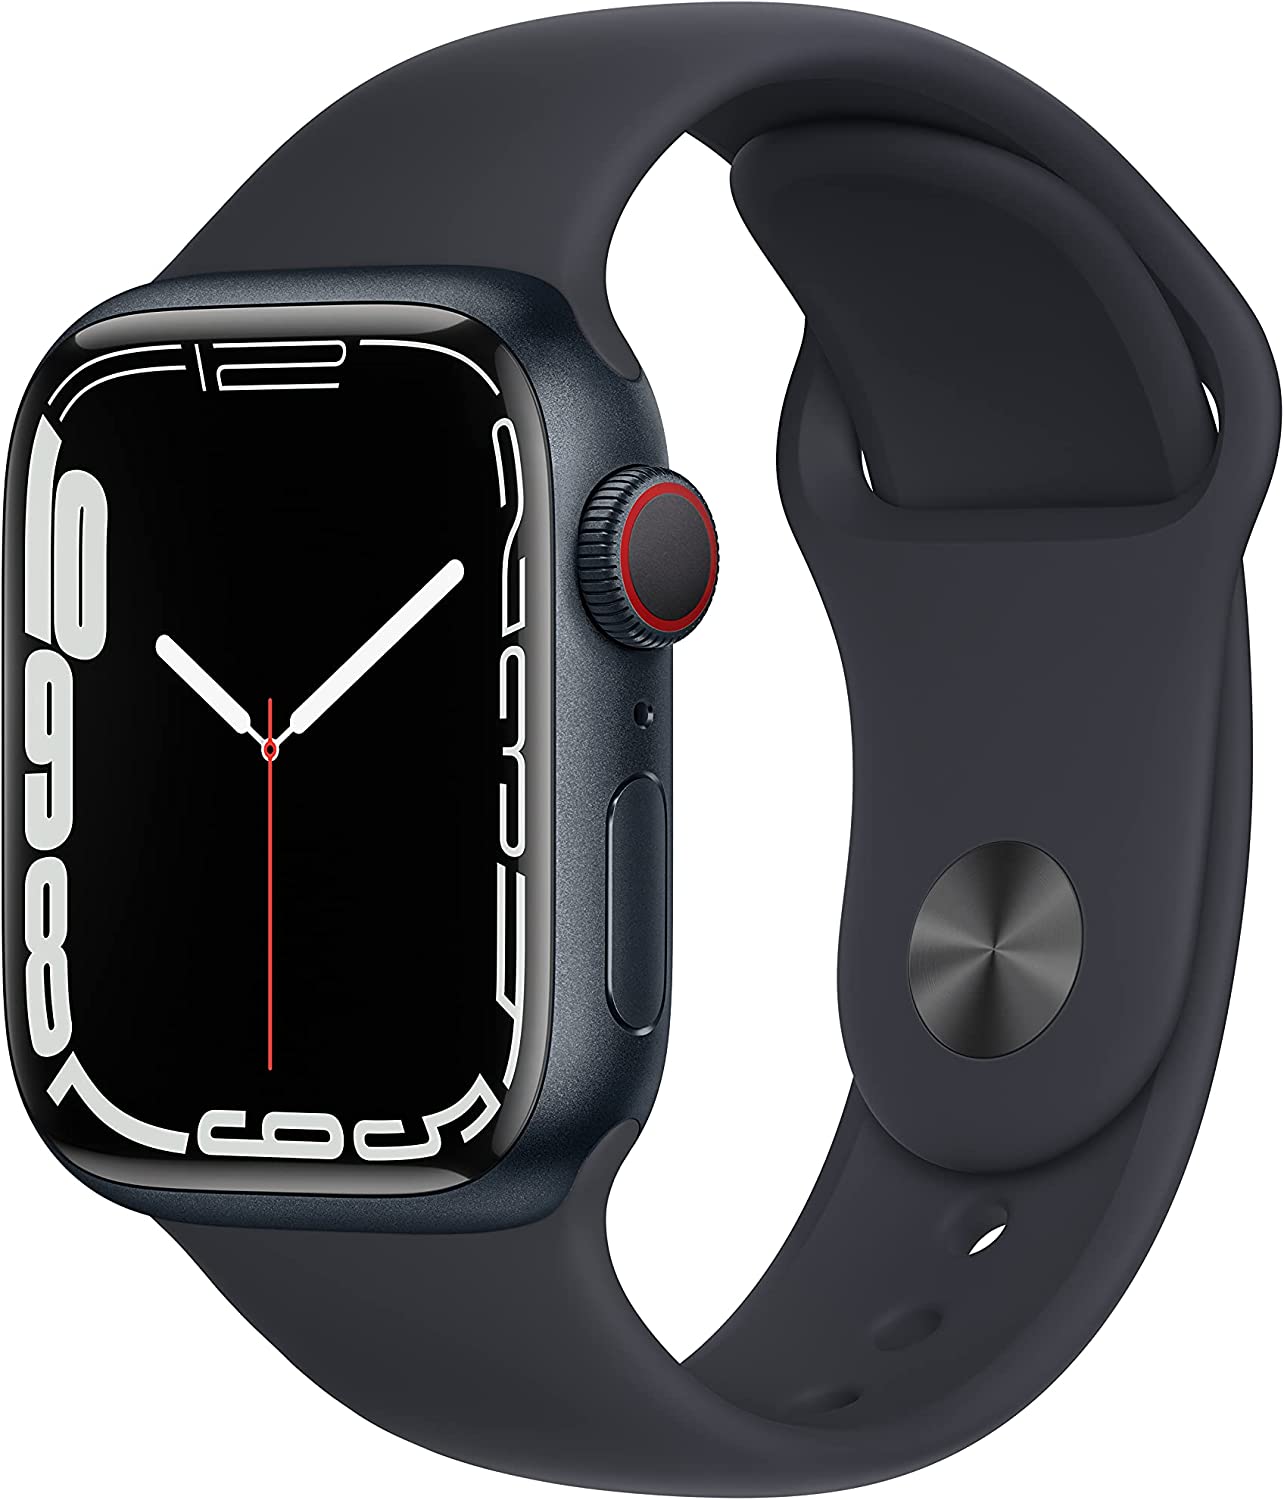 Apple Watch Series 7 Cellular Midnight